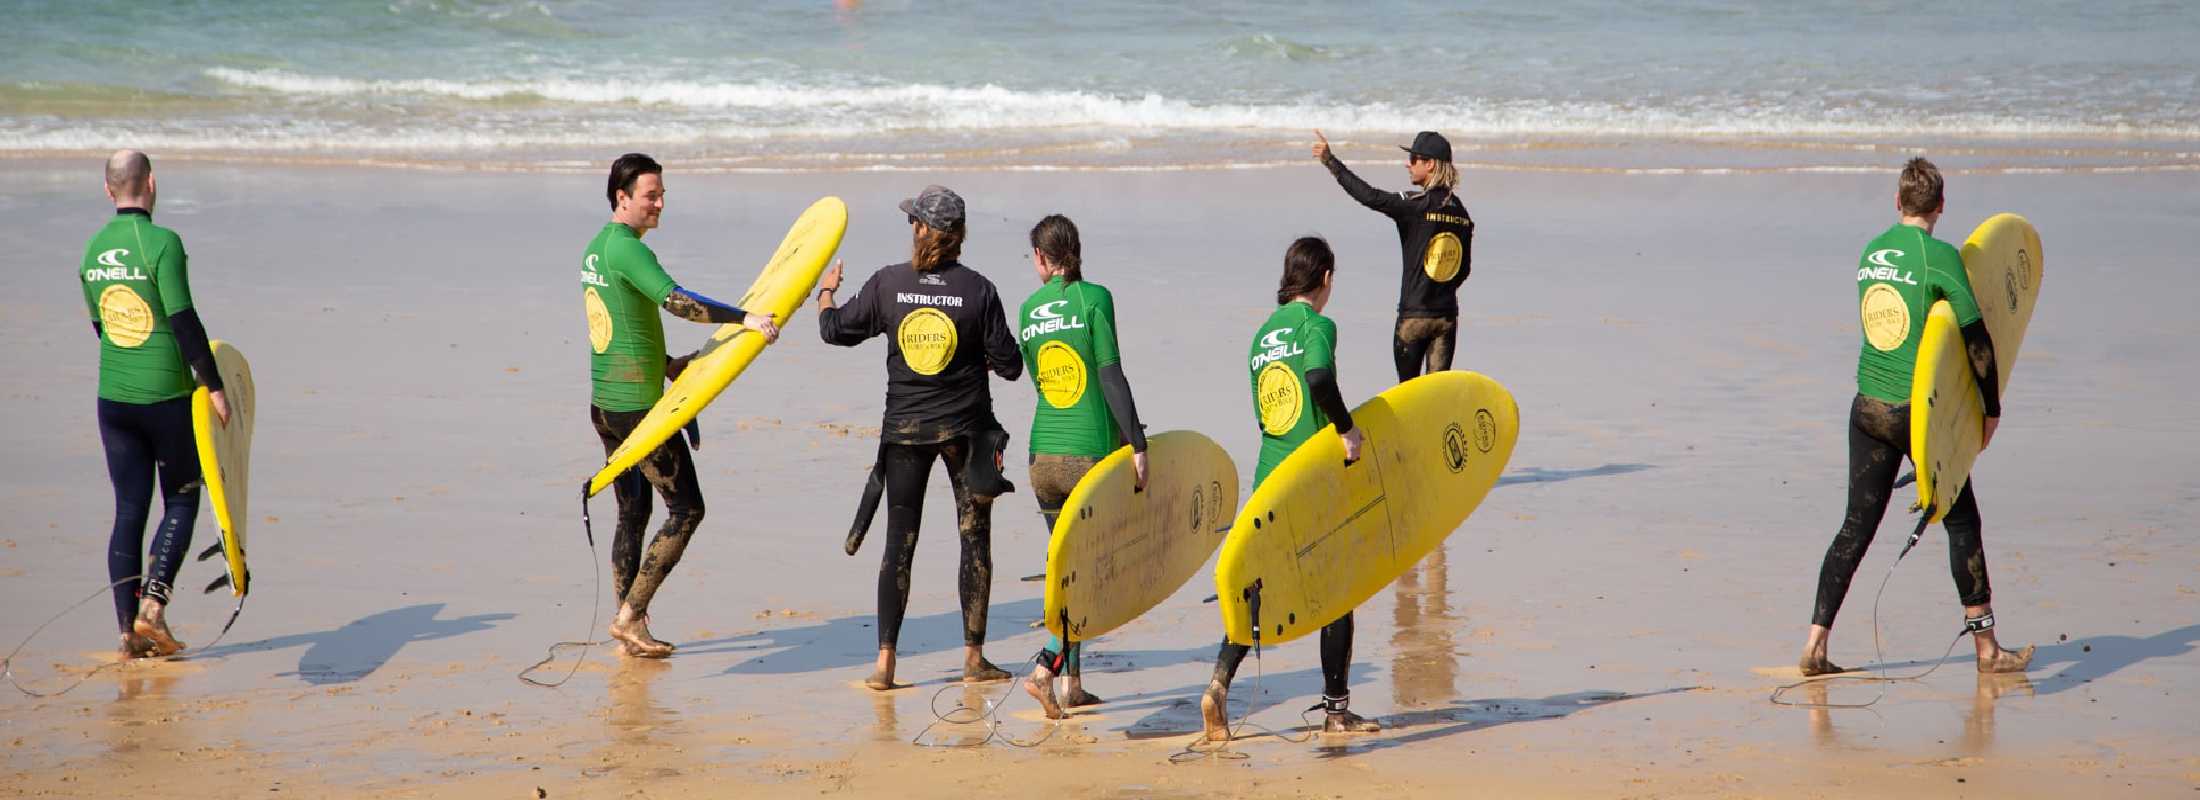 surf en grupos reducidos en Fuerteventura